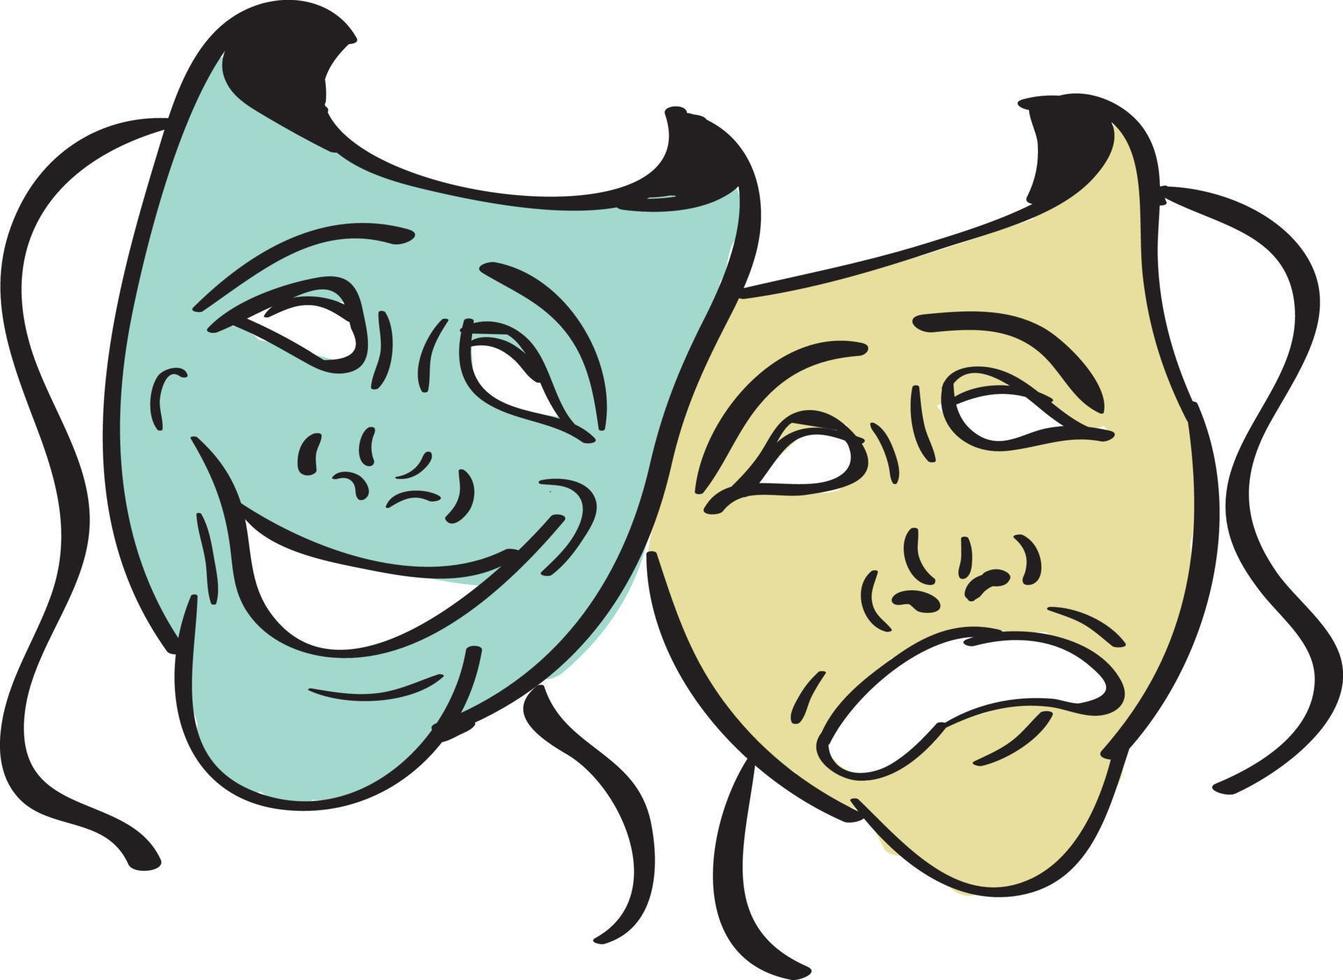 Theater masks, illustration, vector on white background.